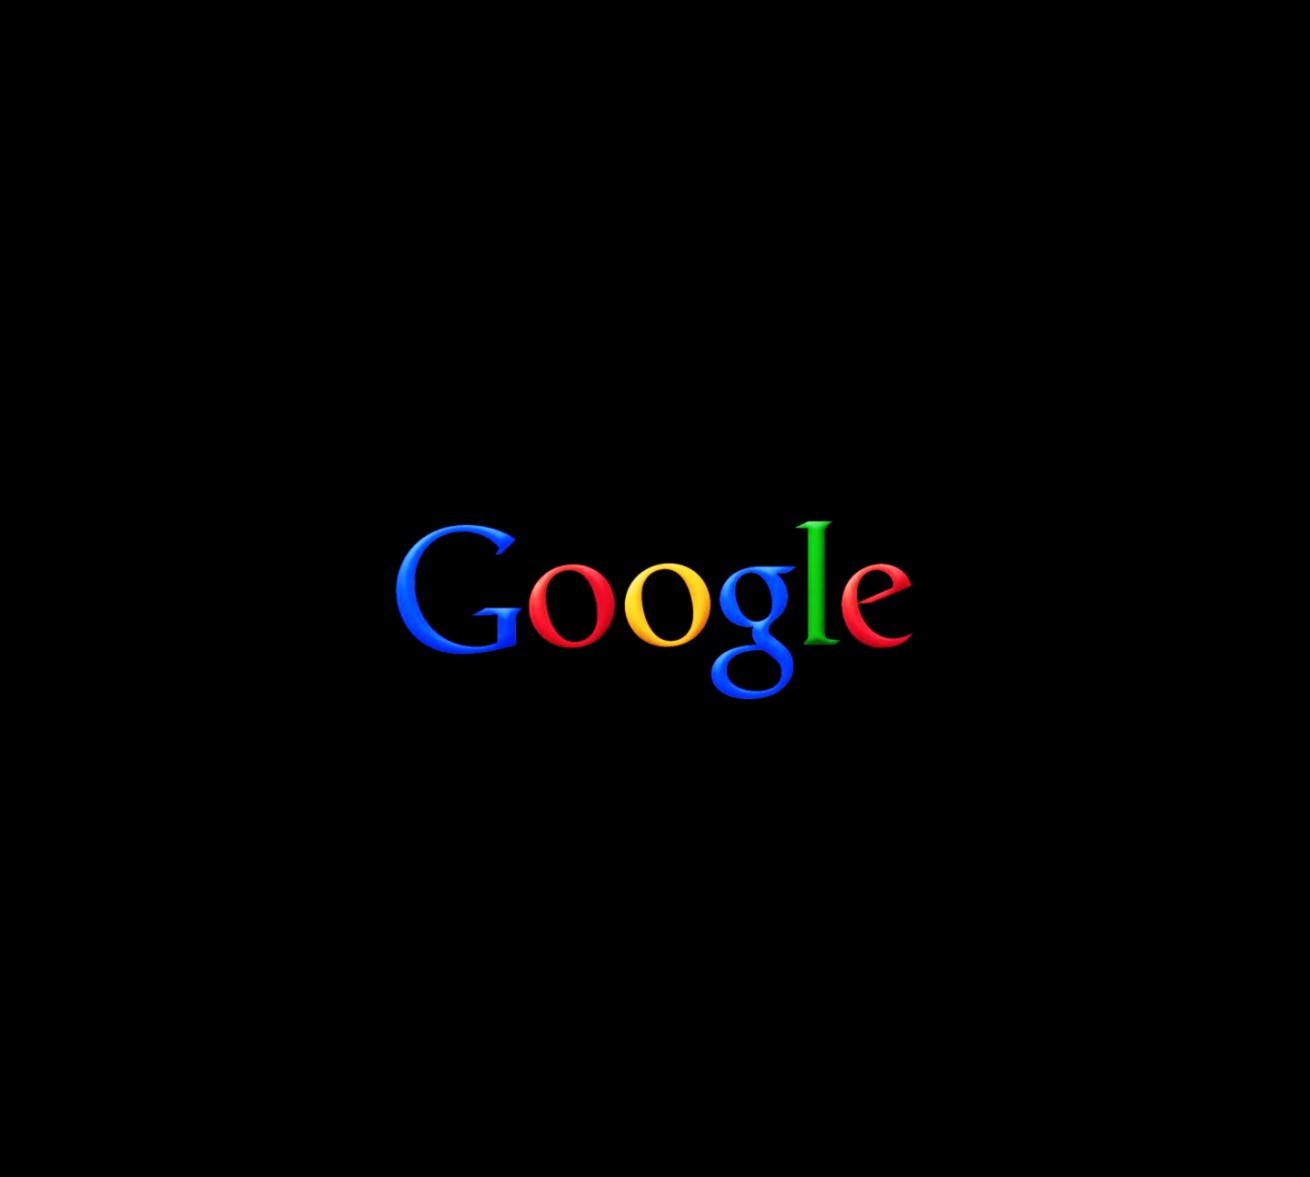 Black Google Wallpaper